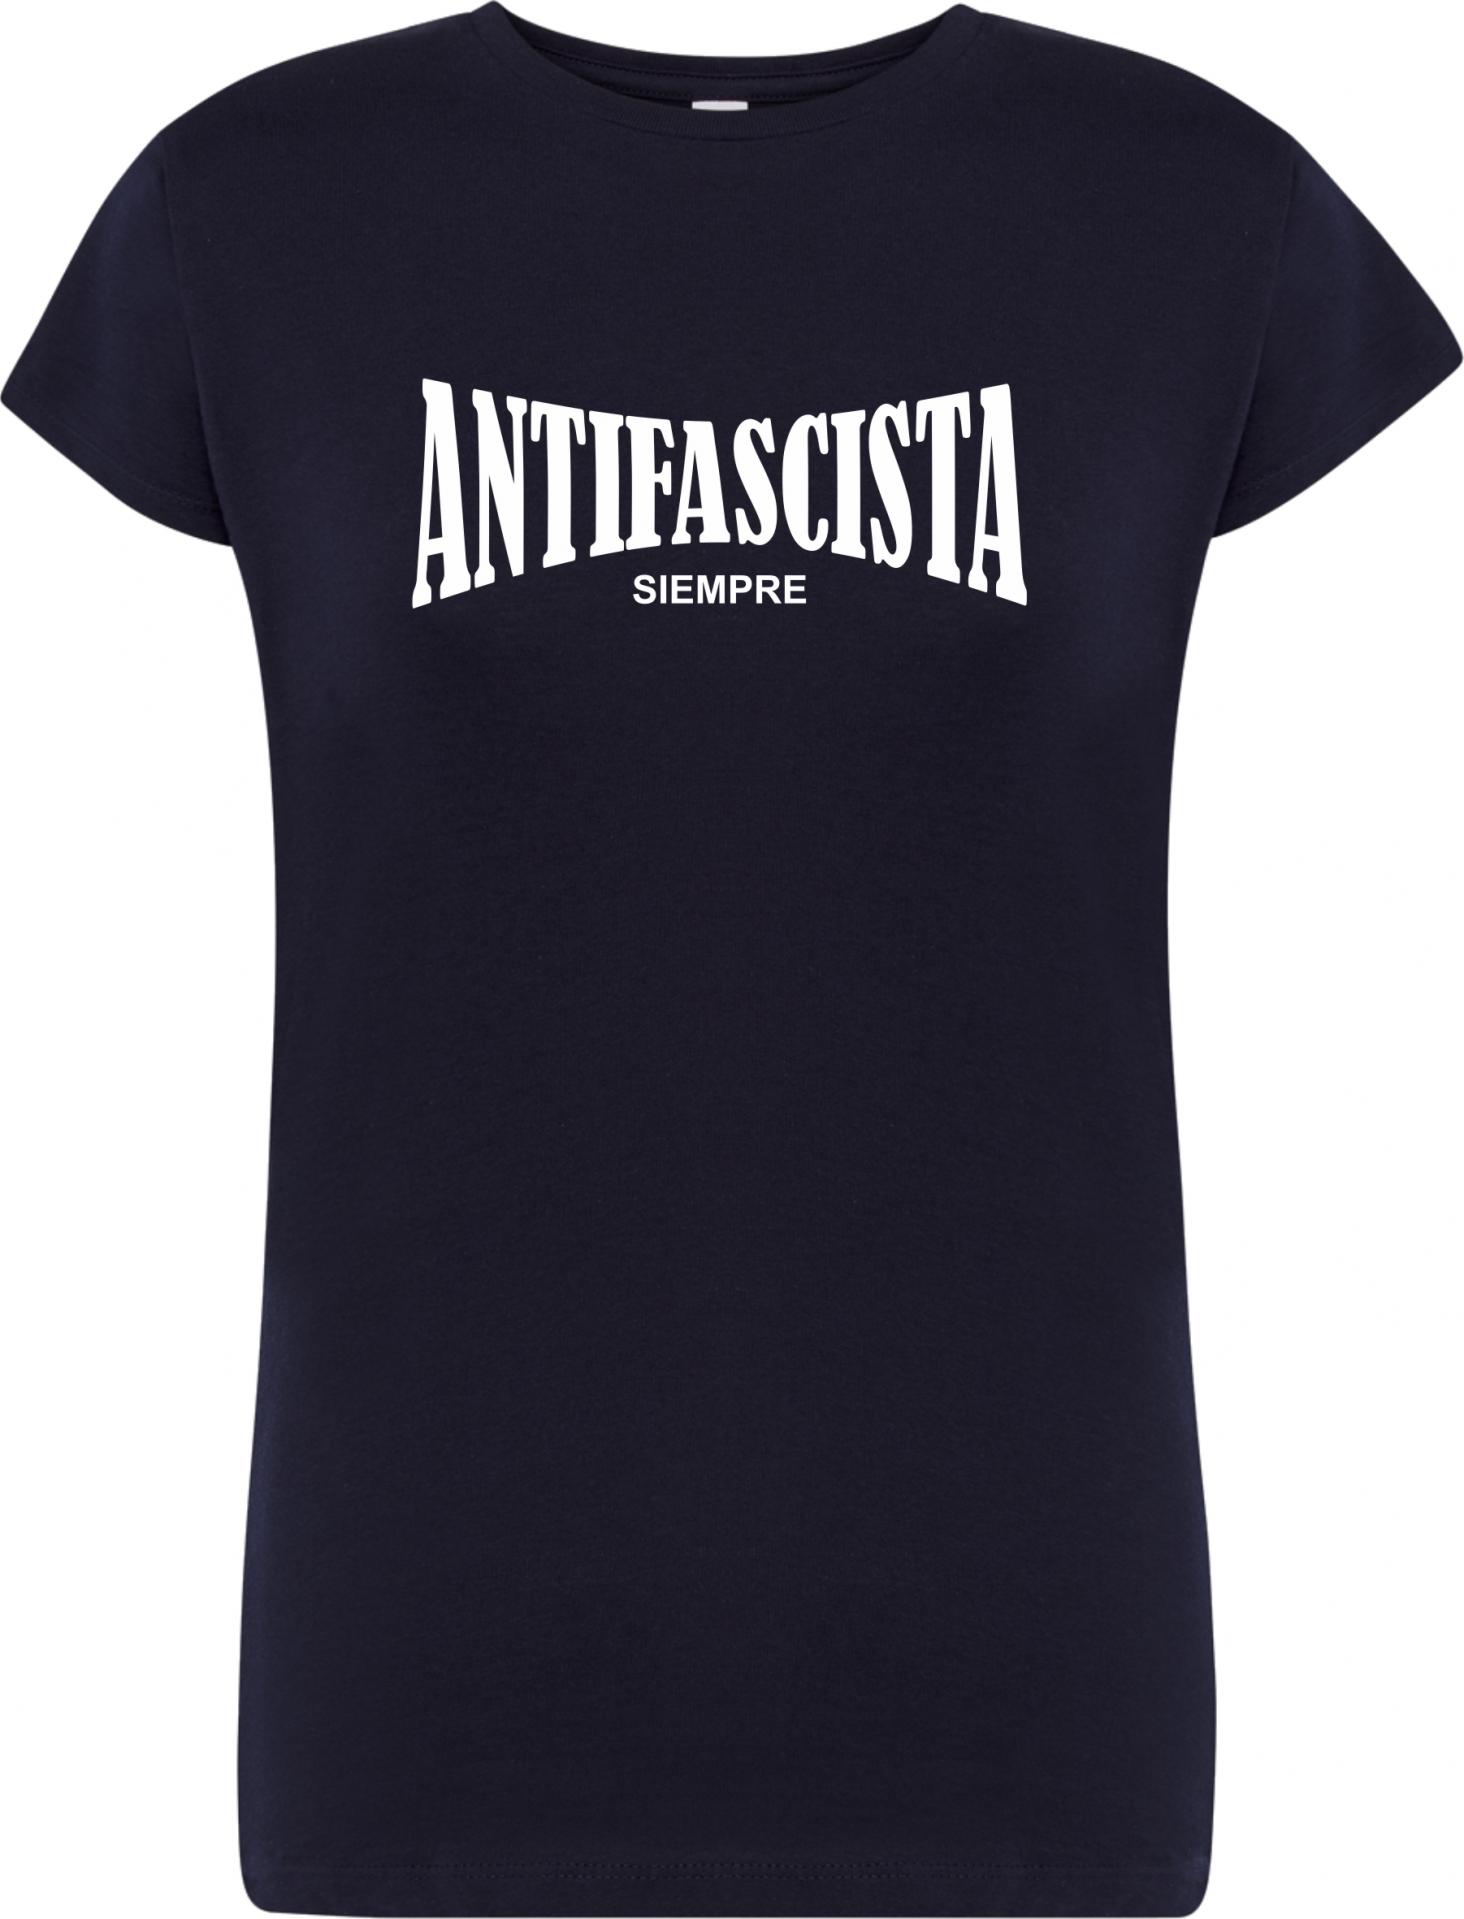 Camiseta de chica Antifascista siempre